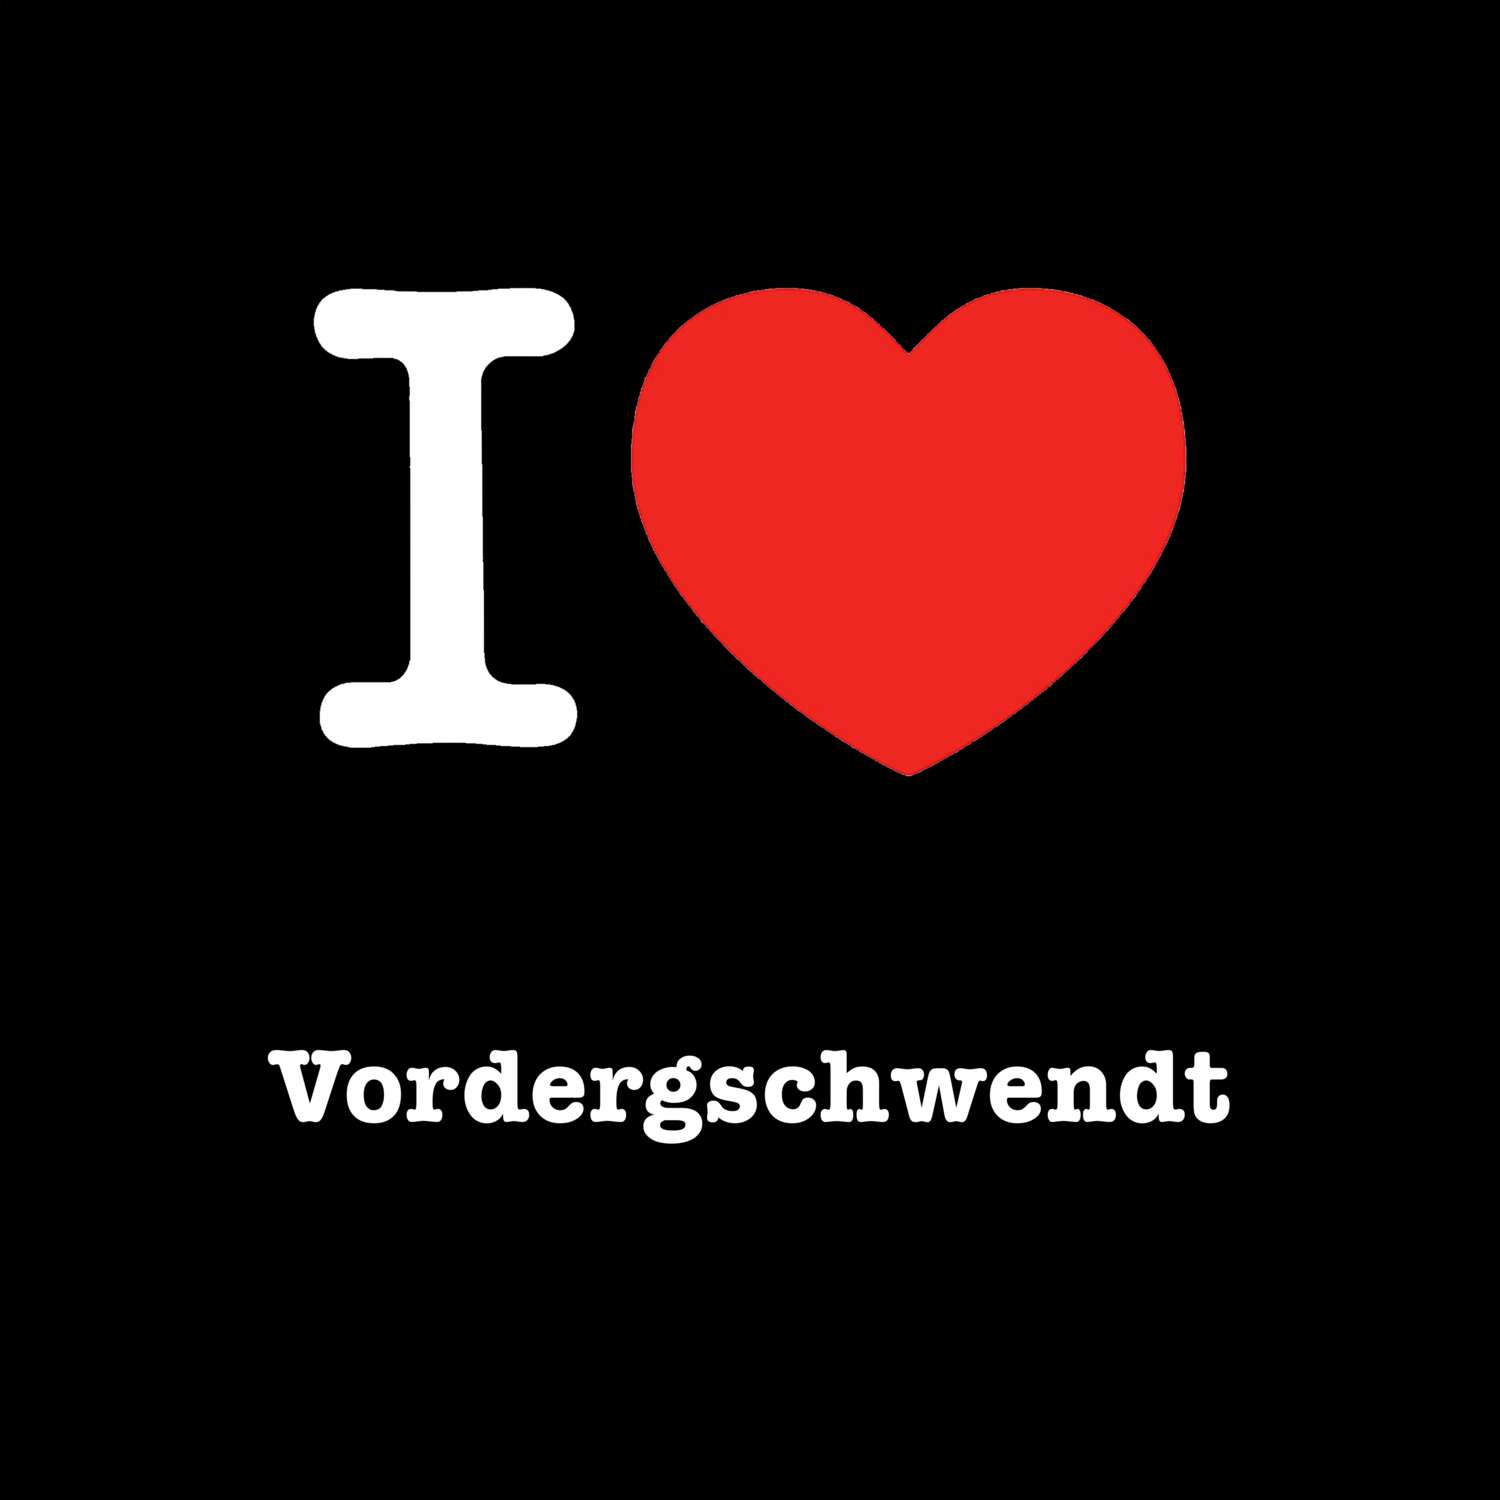 Vordergschwendt T-Shirt »I love«